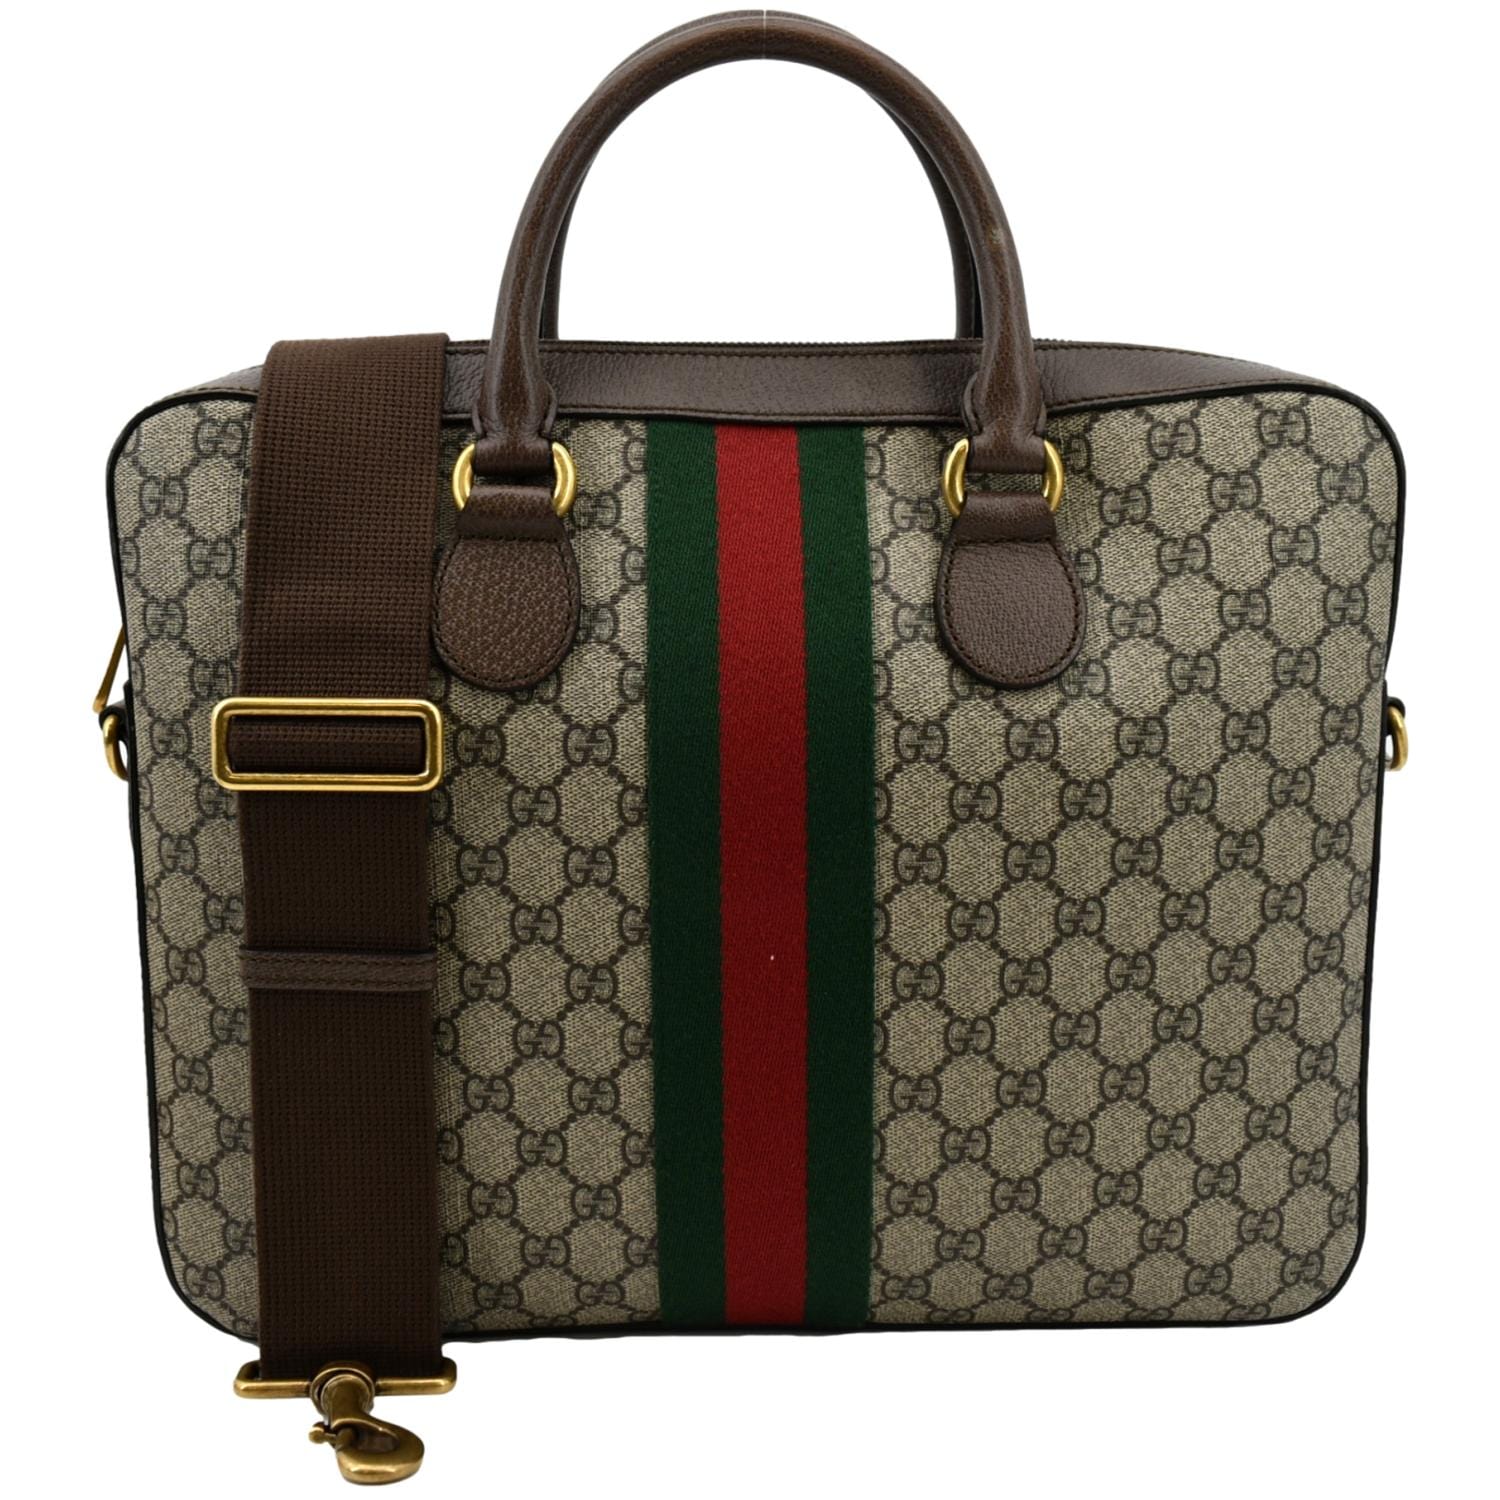 14 Gucci Money Bag PSD Images - Gucci Bag Full Money, Gucci Duffle